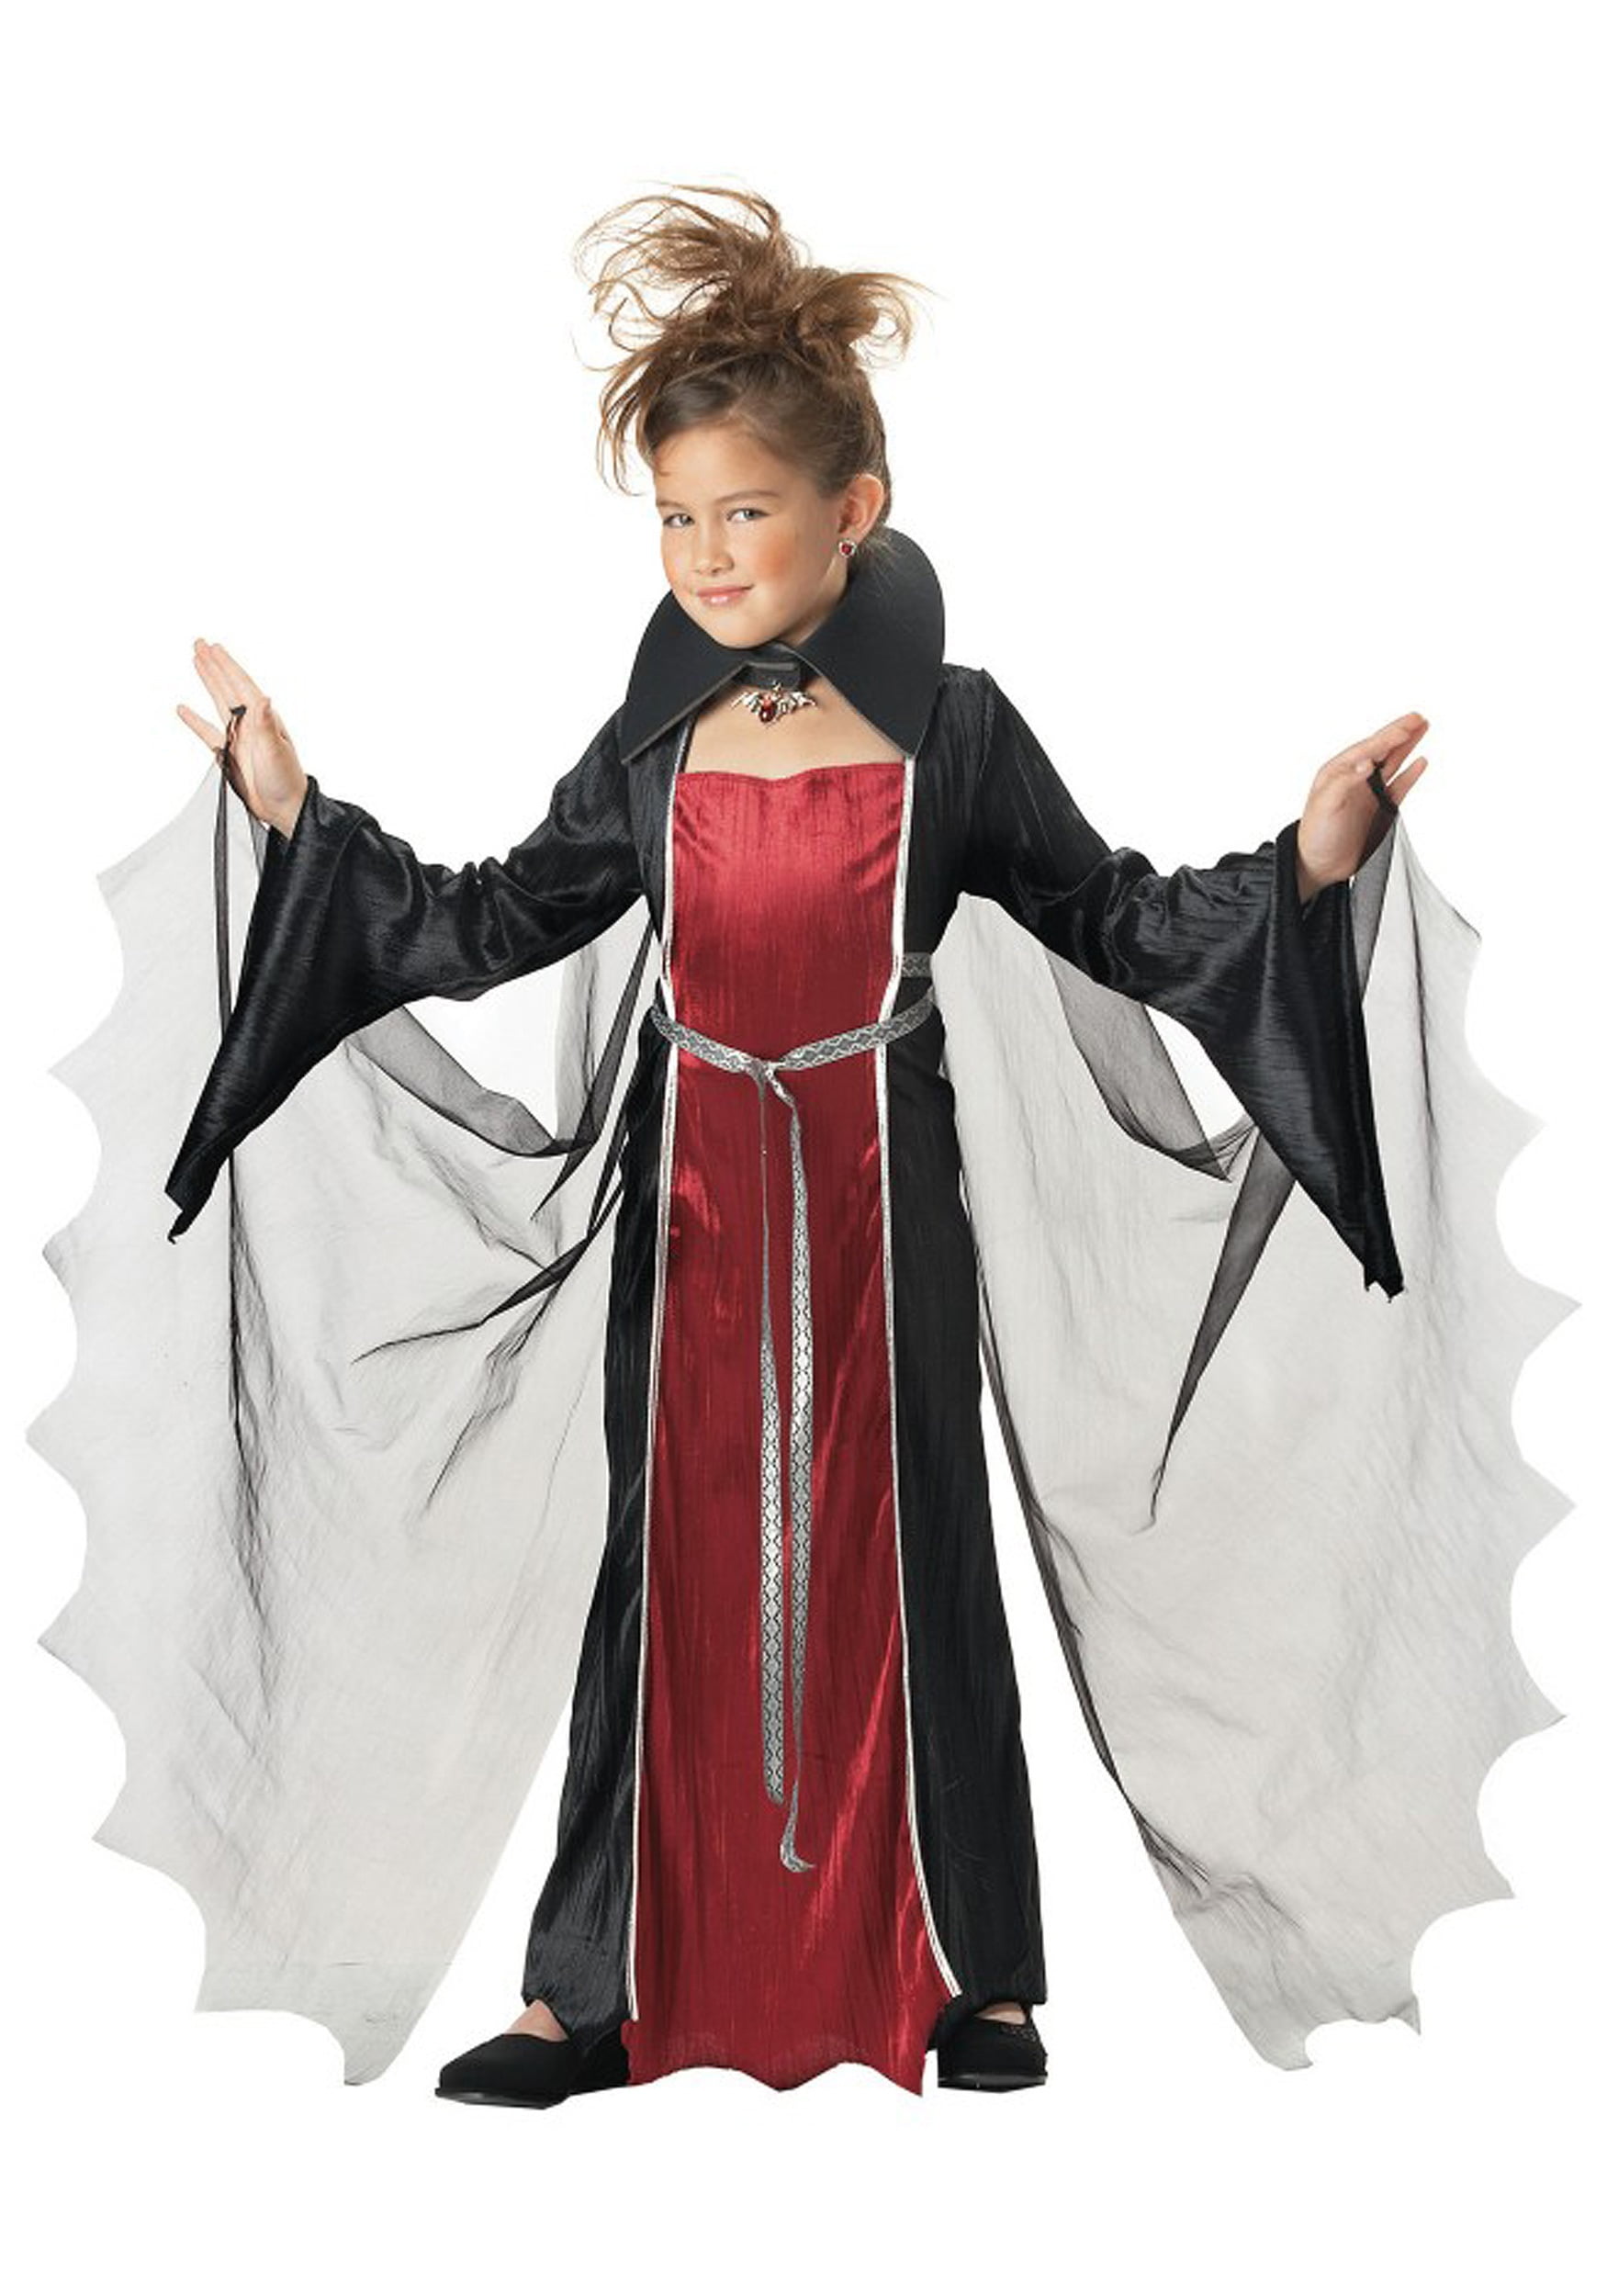 Childs Cheeky Bat Costume Vampire Halloween Girls Kids Fancy Dress Outfit